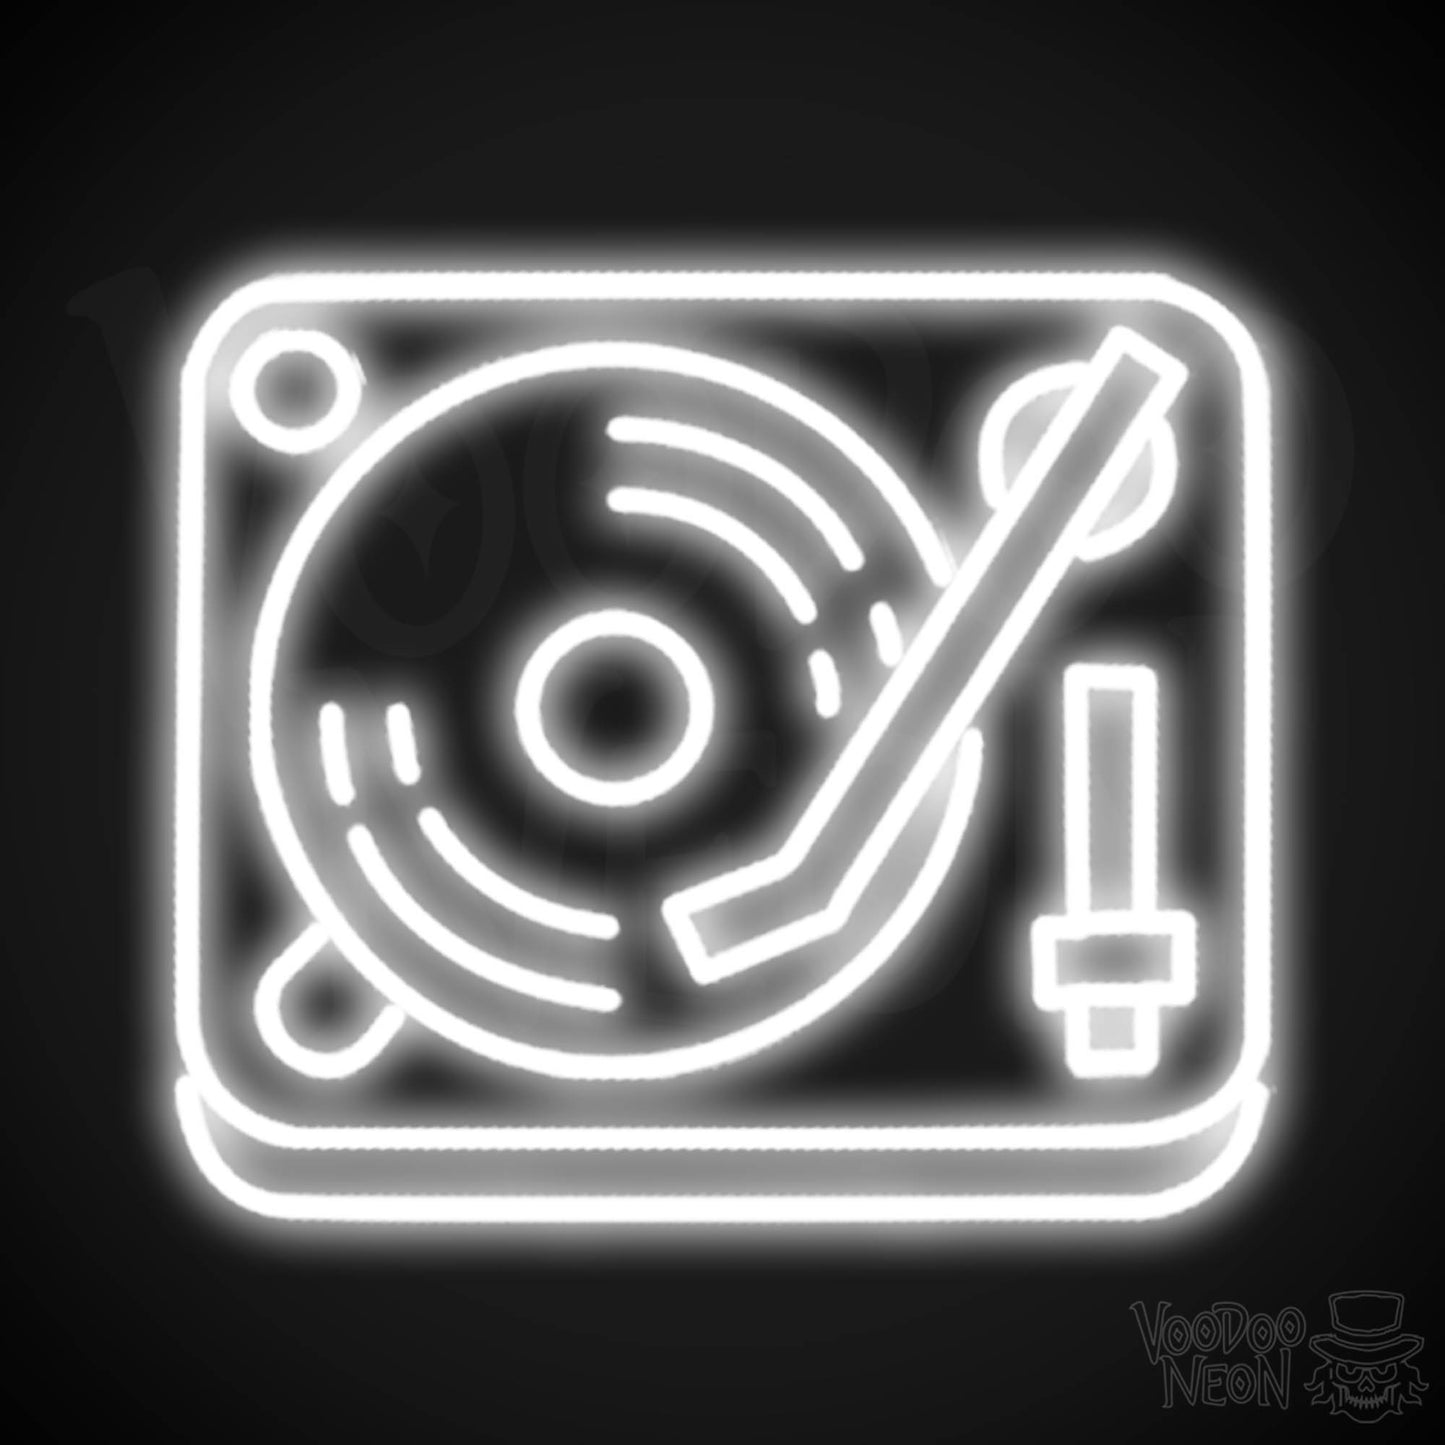 Retro Record Player Neon Sign - Record Player Neon Wall Art - Color White